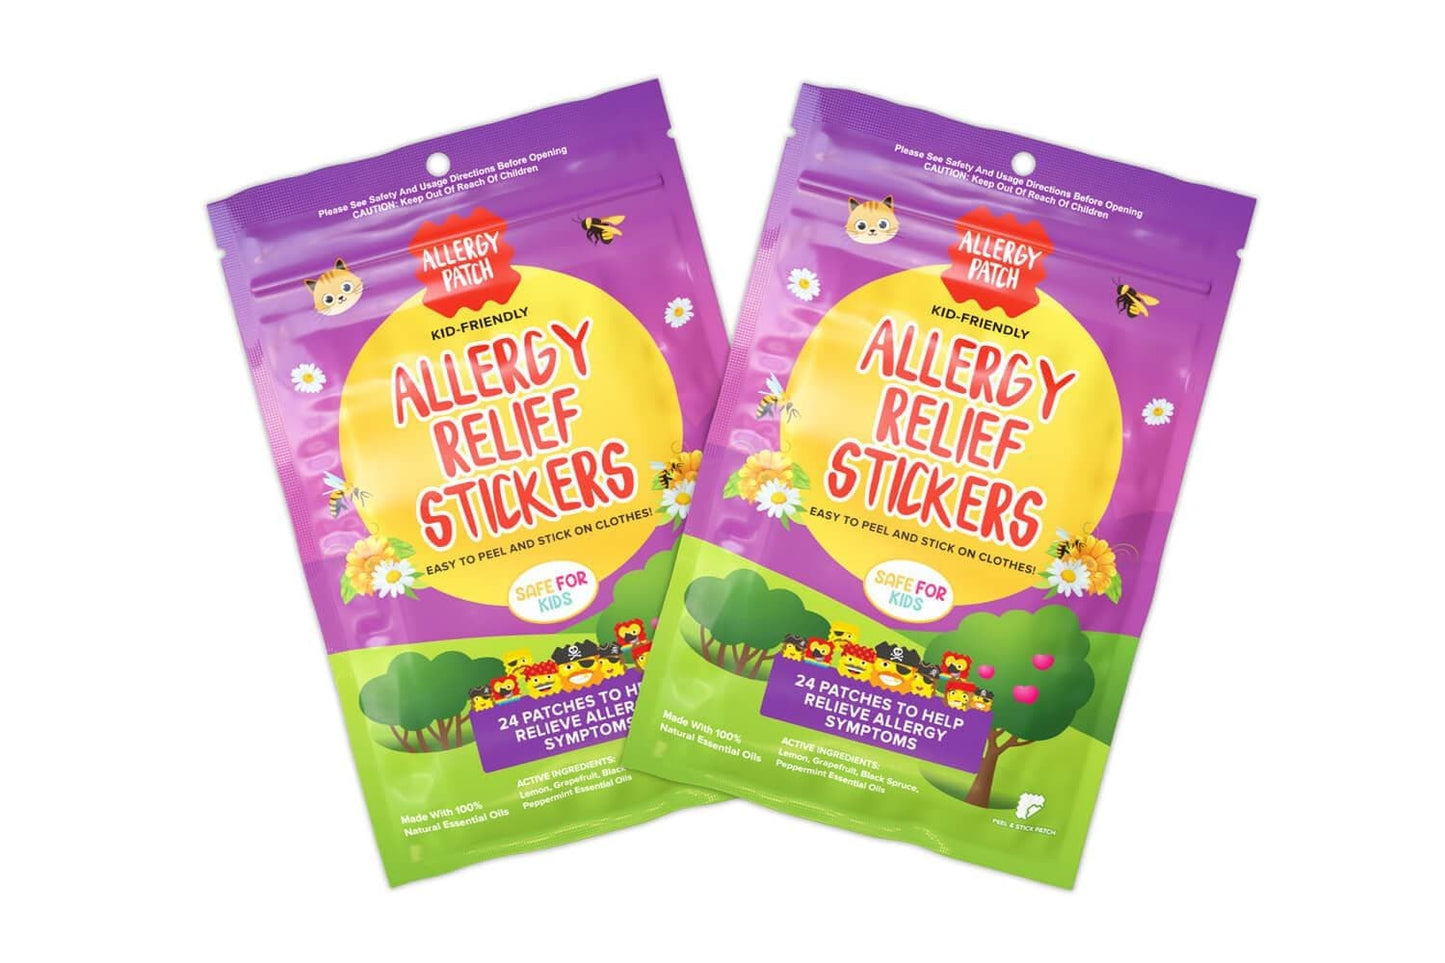 *AllergyPatch Allergy Relief Stickers